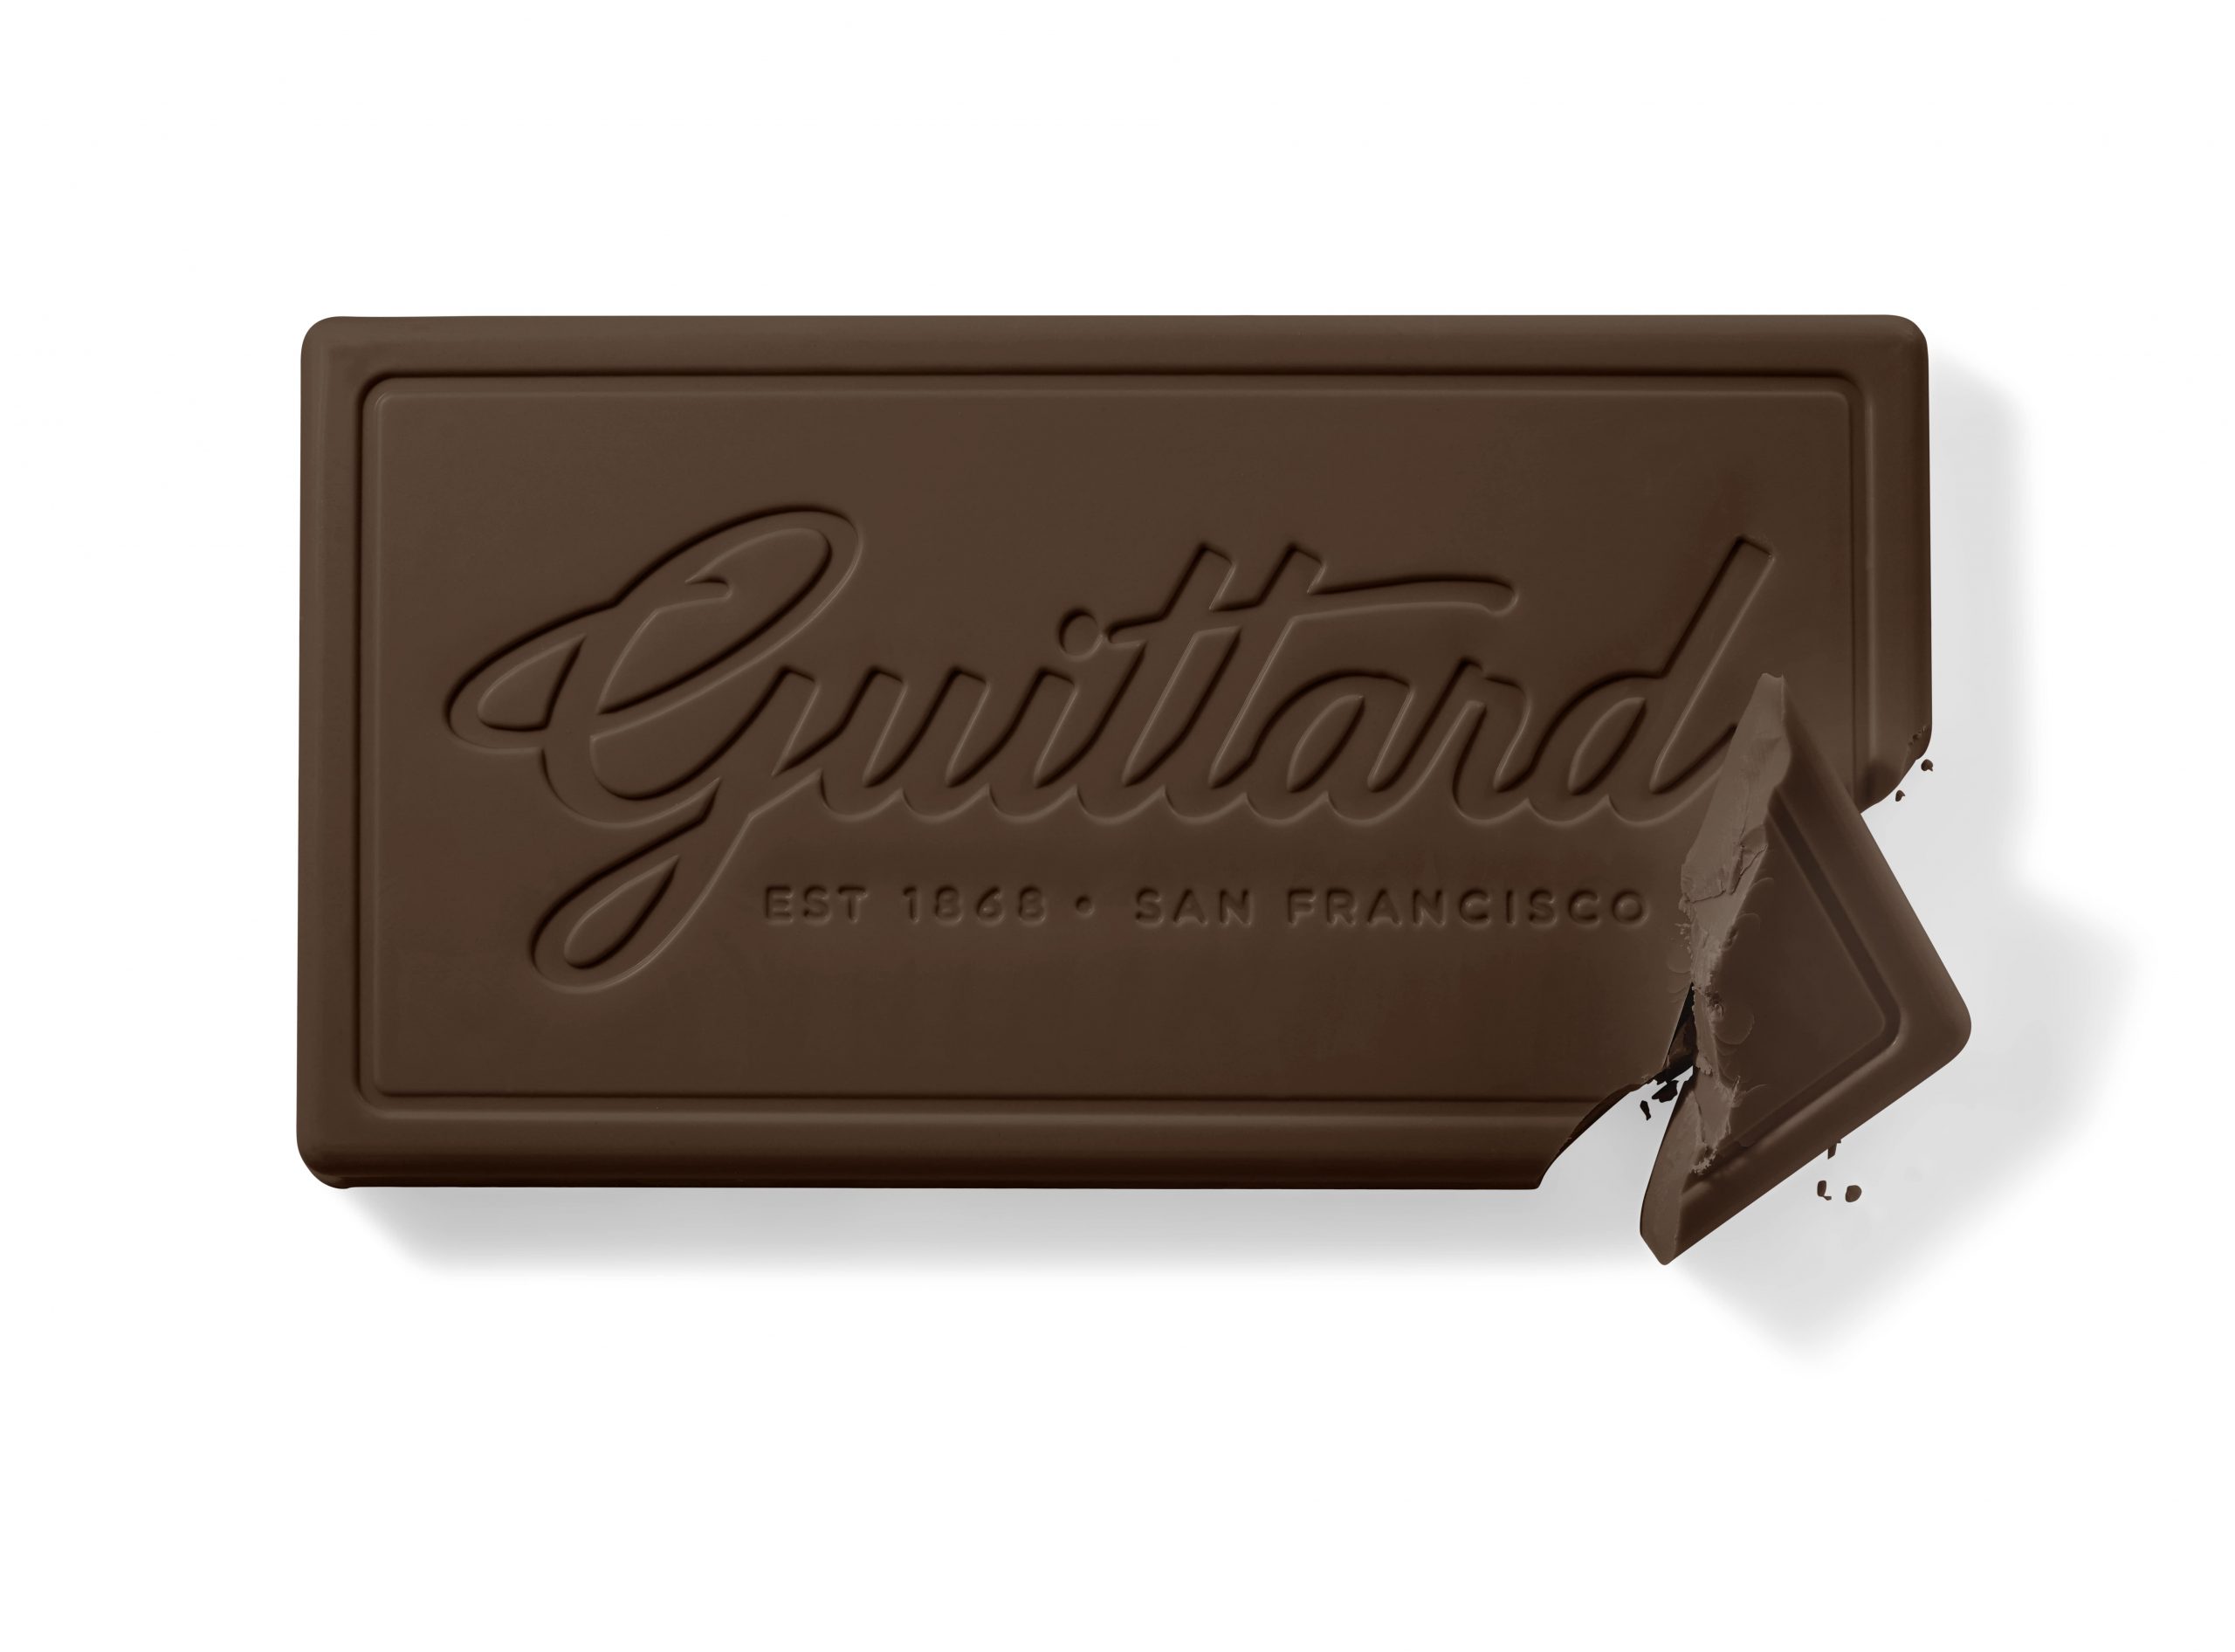 Guittard Gourmet Bittersweet 63% Dark Couverture Chocolate Block